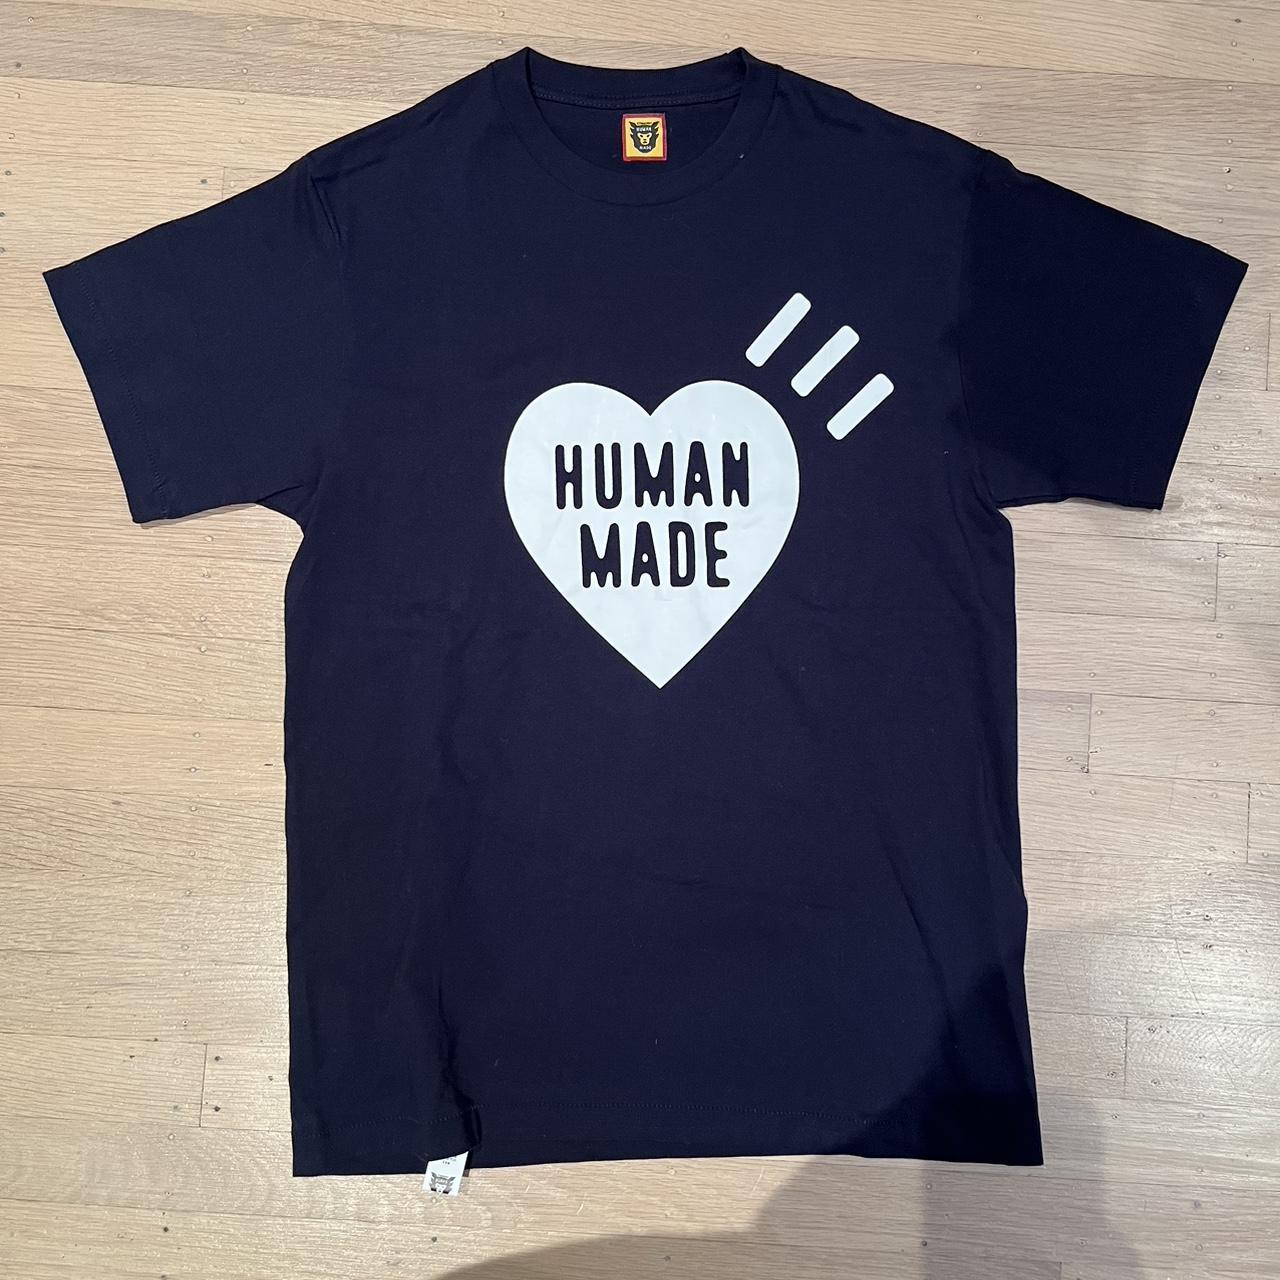 Human Made Men's Navy T-shirt